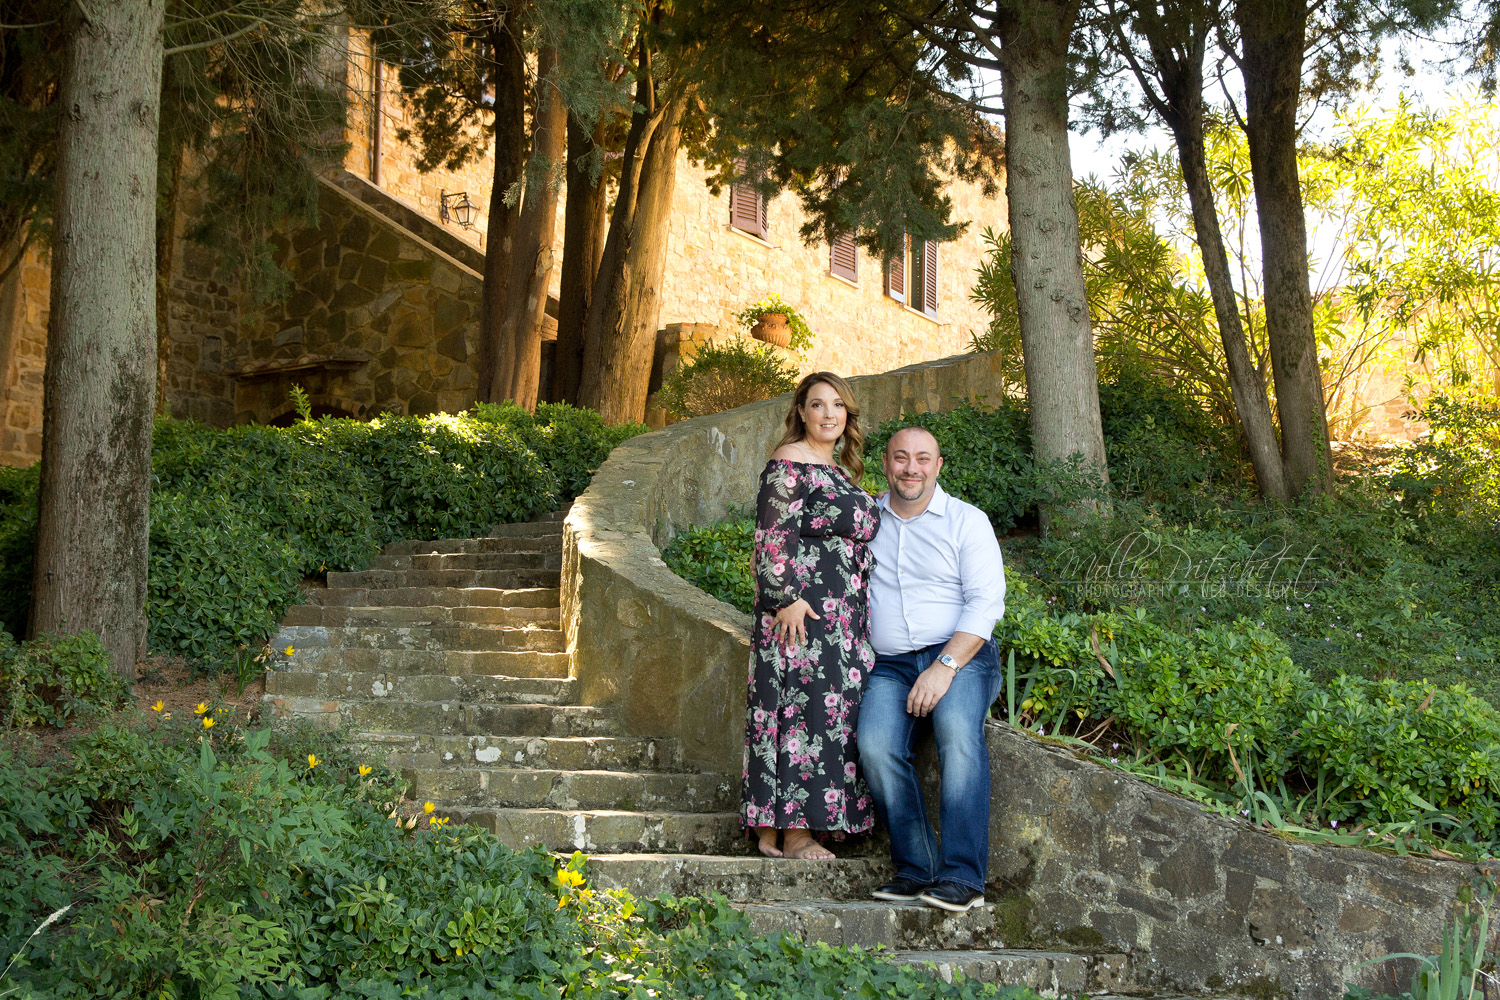 Wedding in Tuscany Destination Photographer